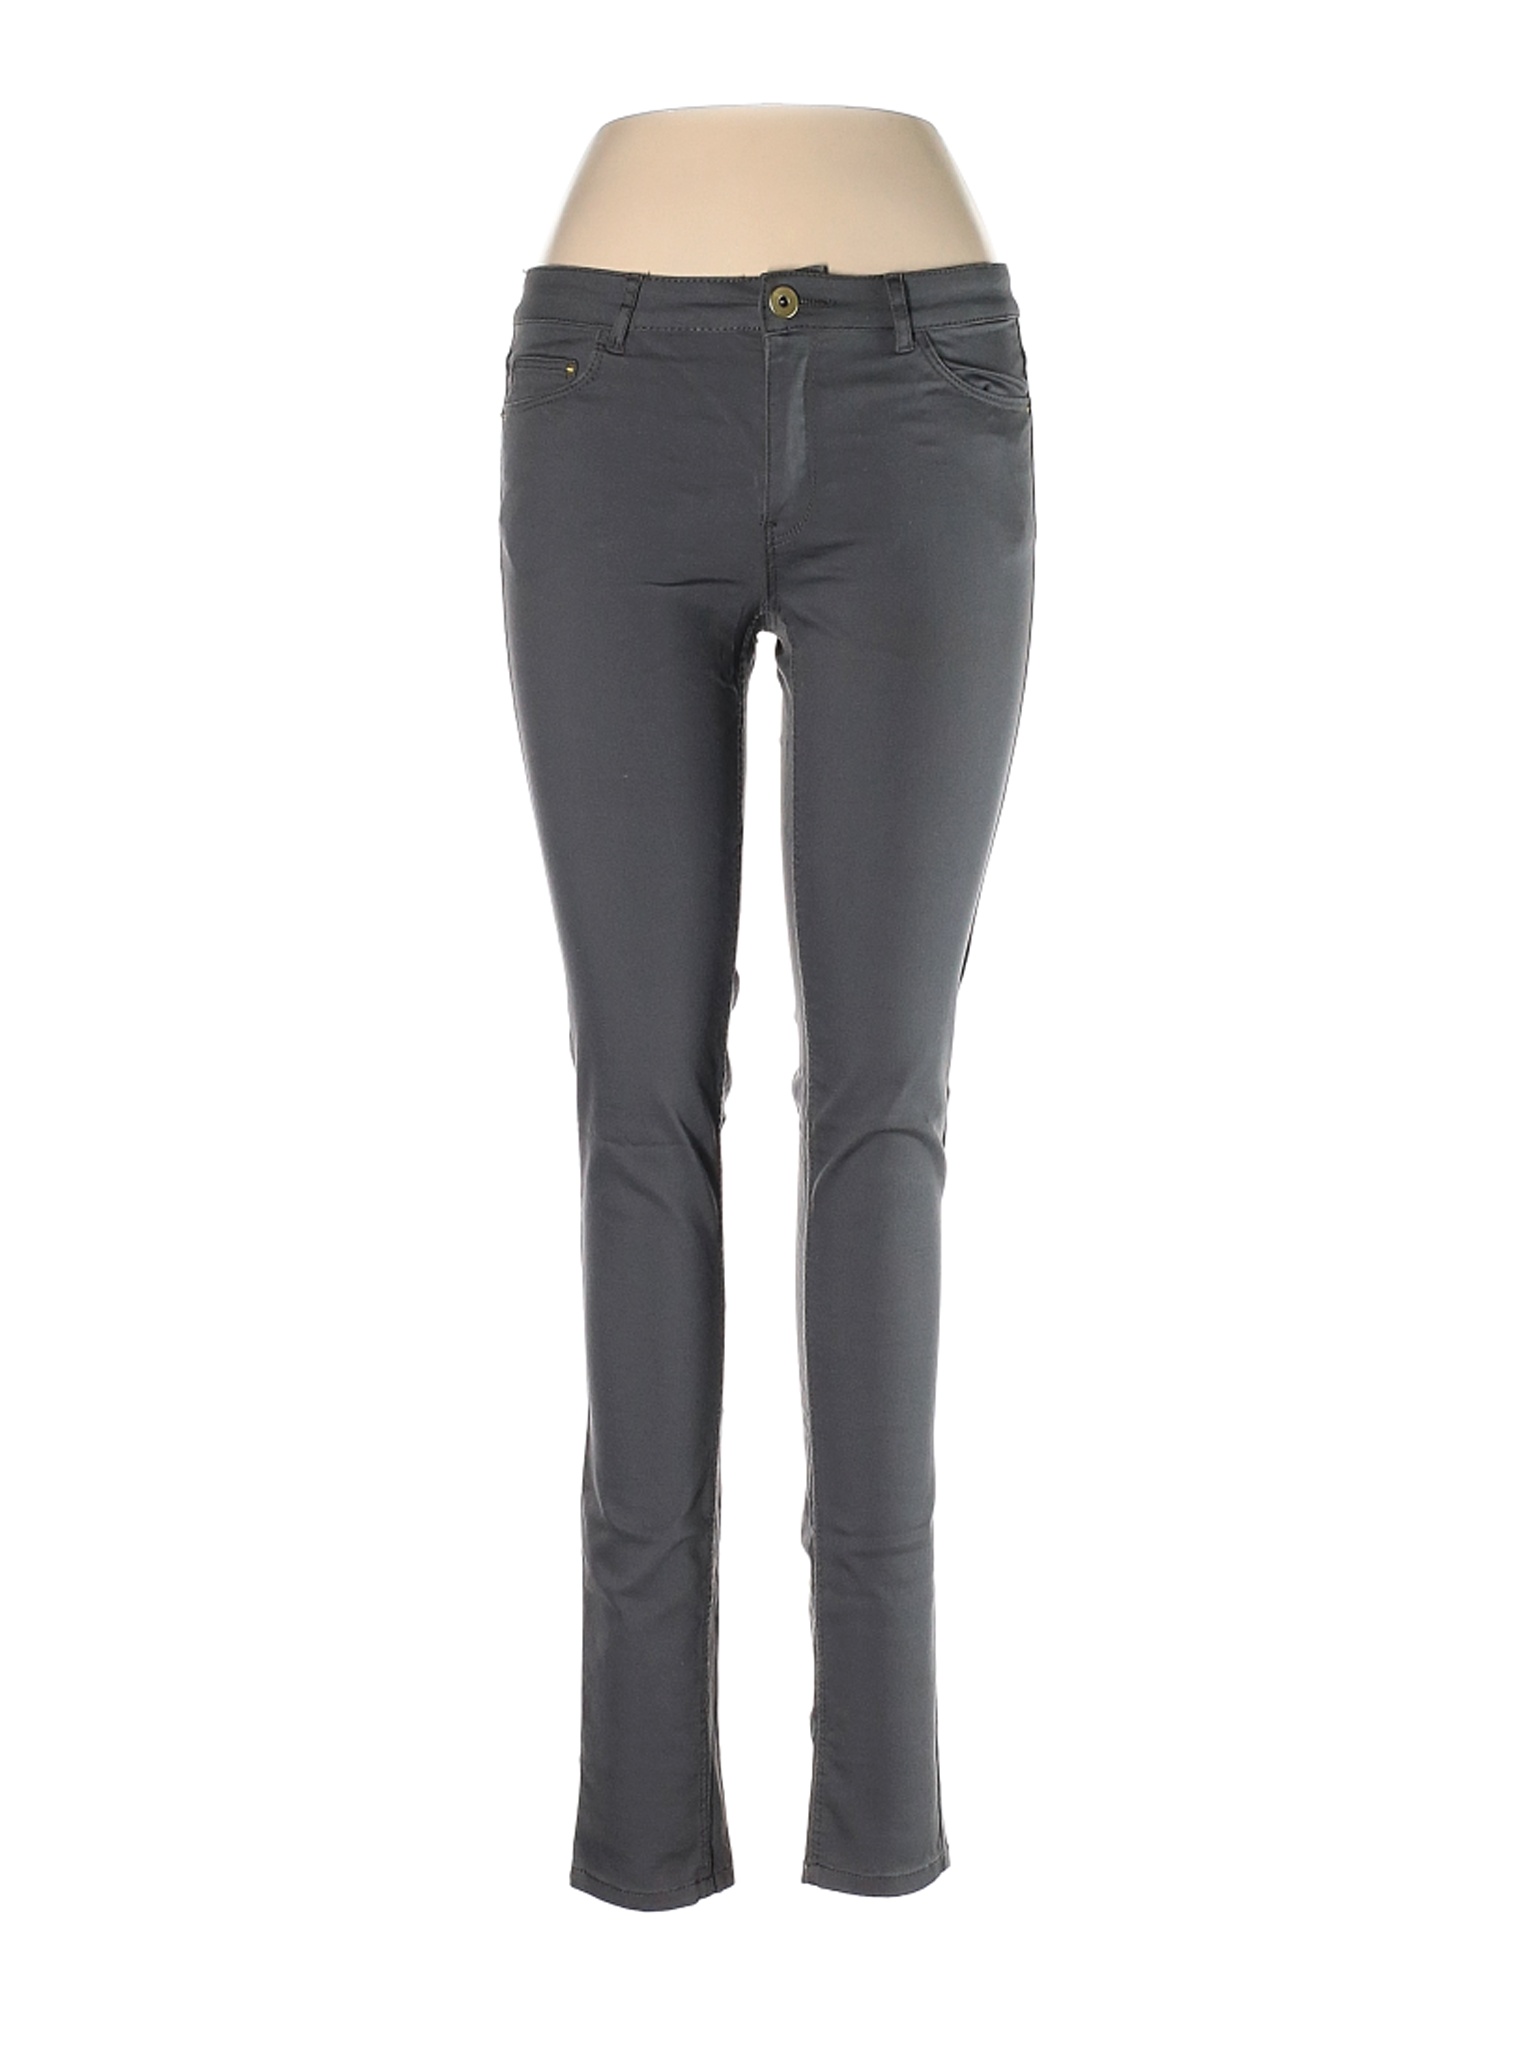 h&m size 8 jeans